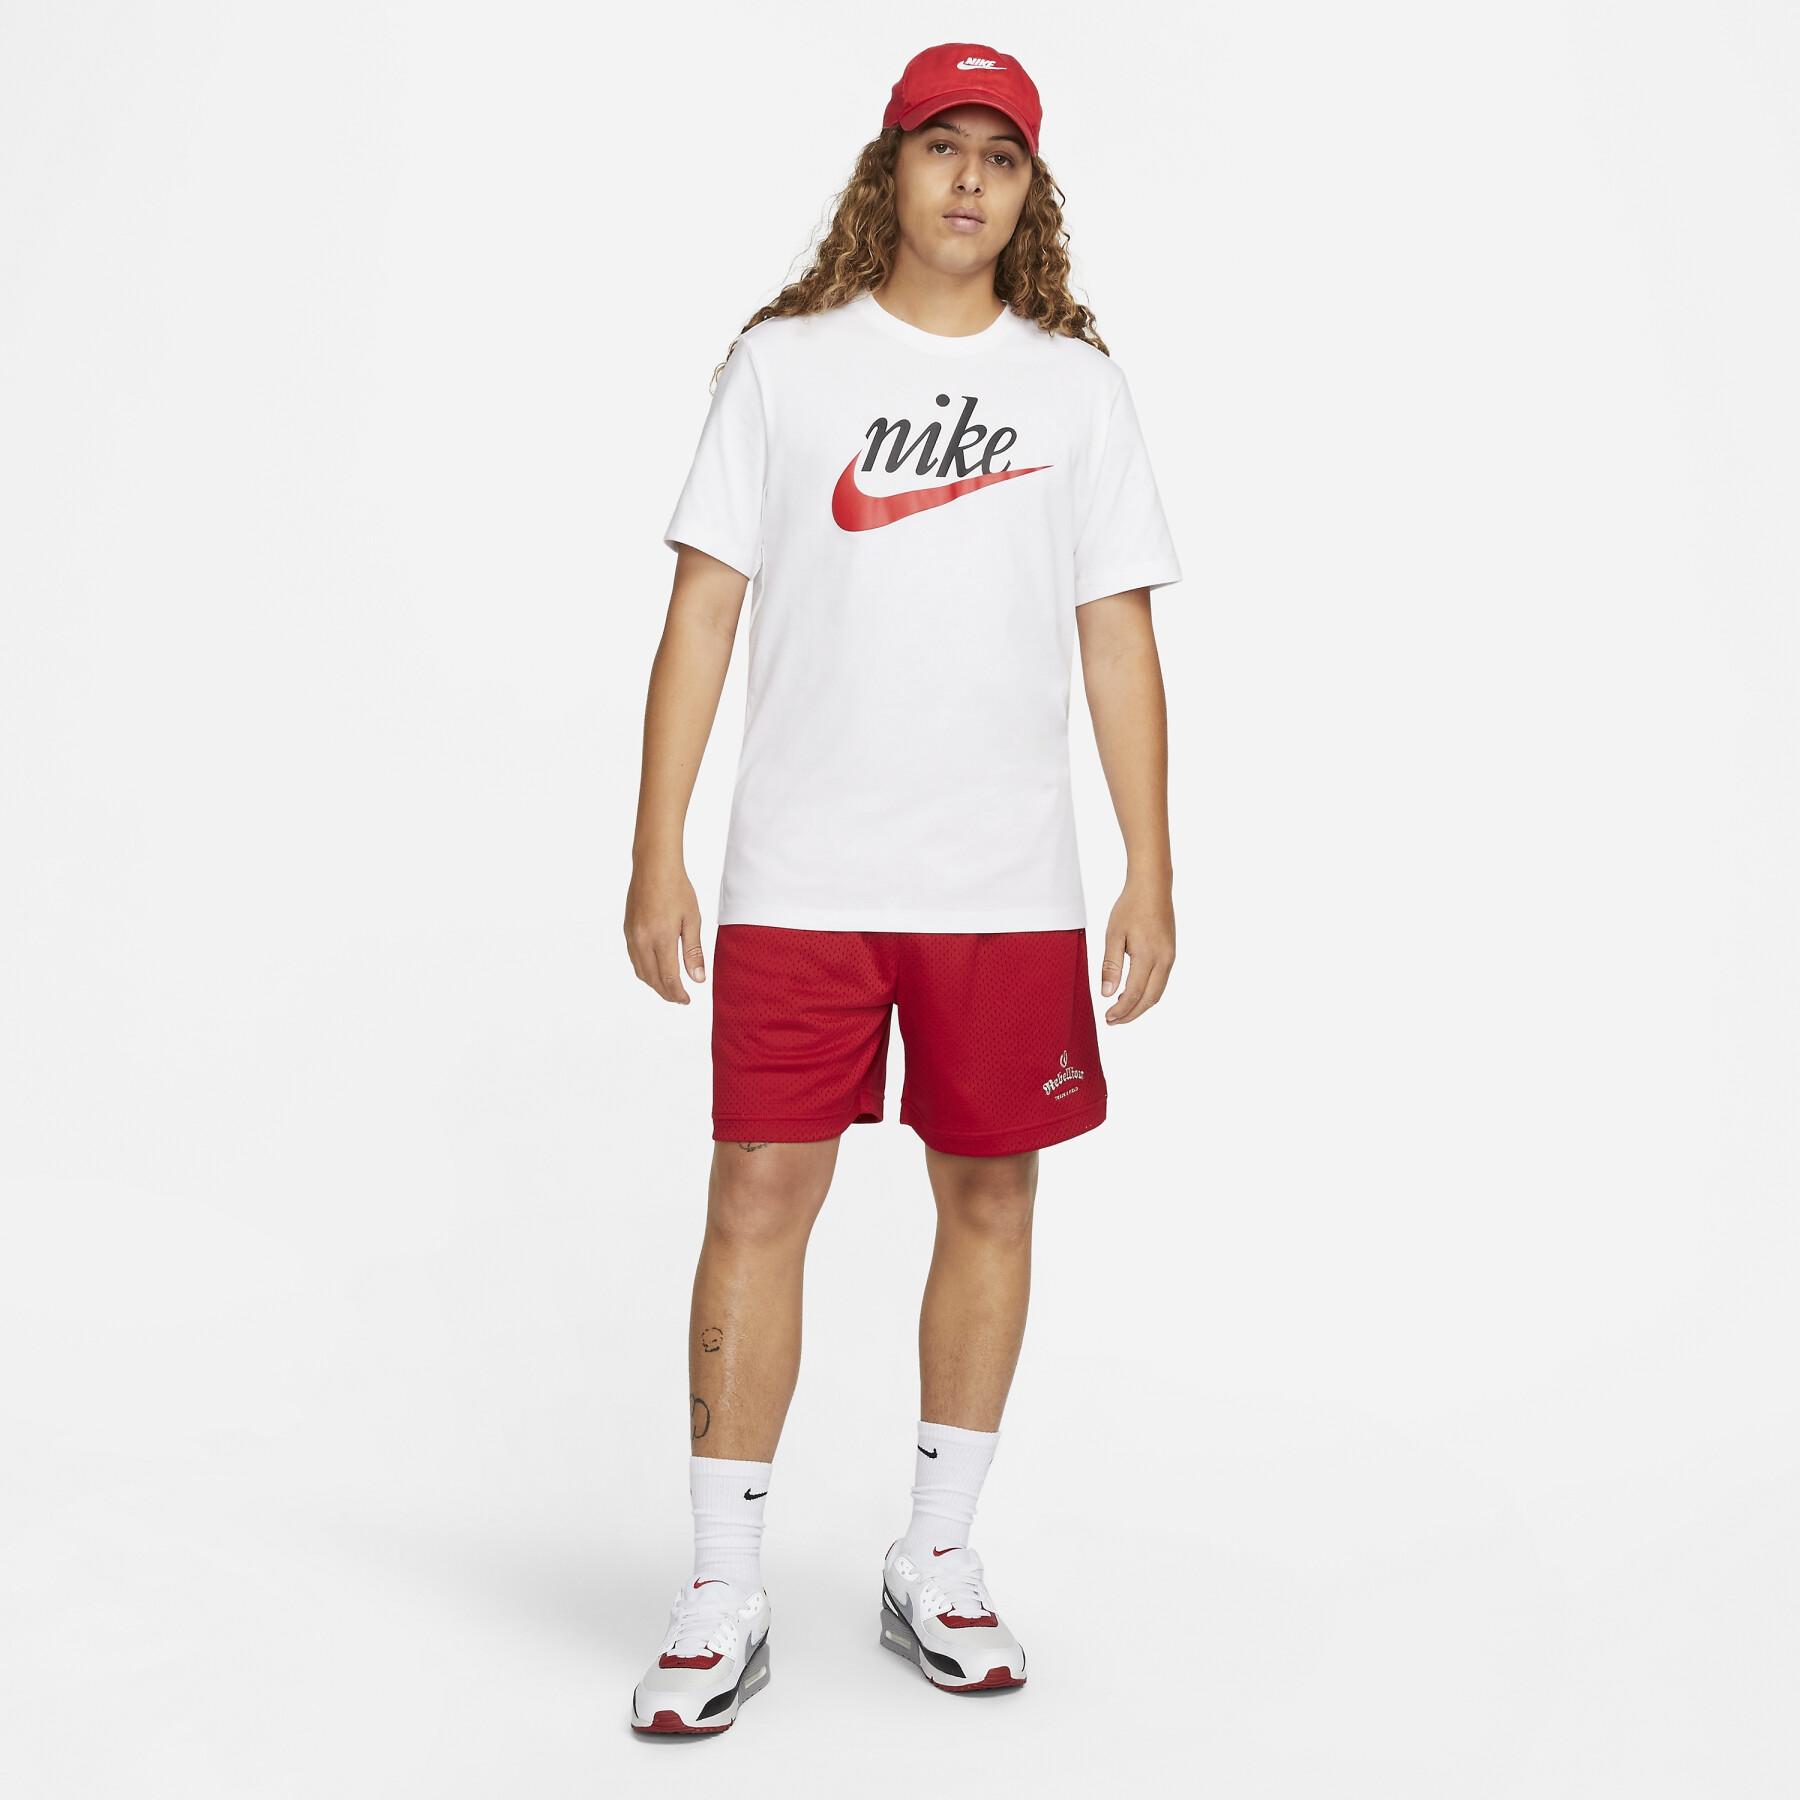 T-shirt Nike Futura 2